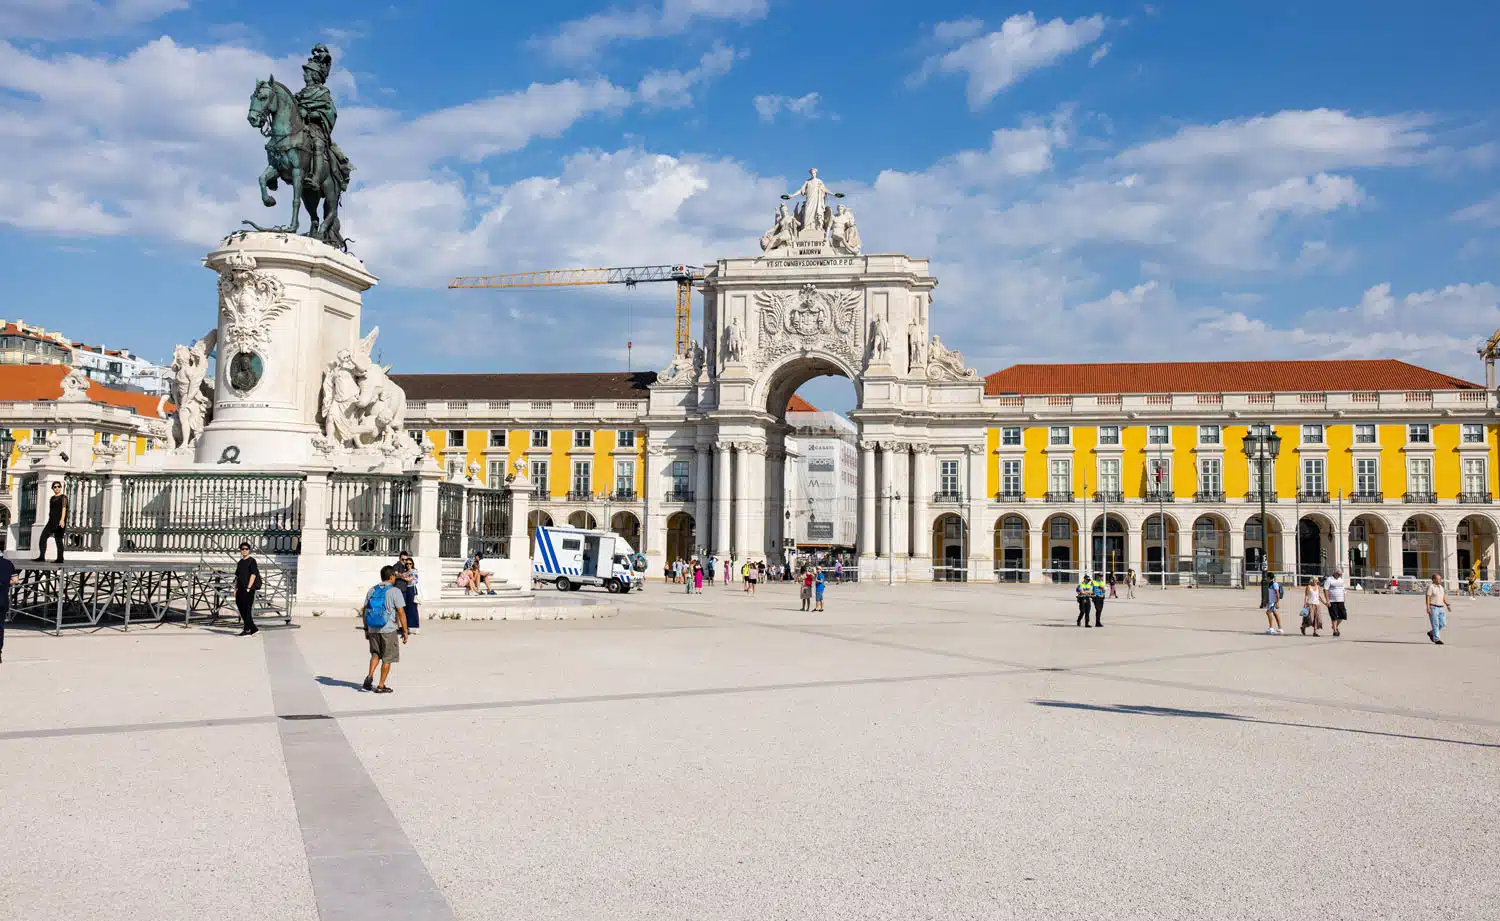 Praca do Comercio | One Day in Lisbon Itinerary